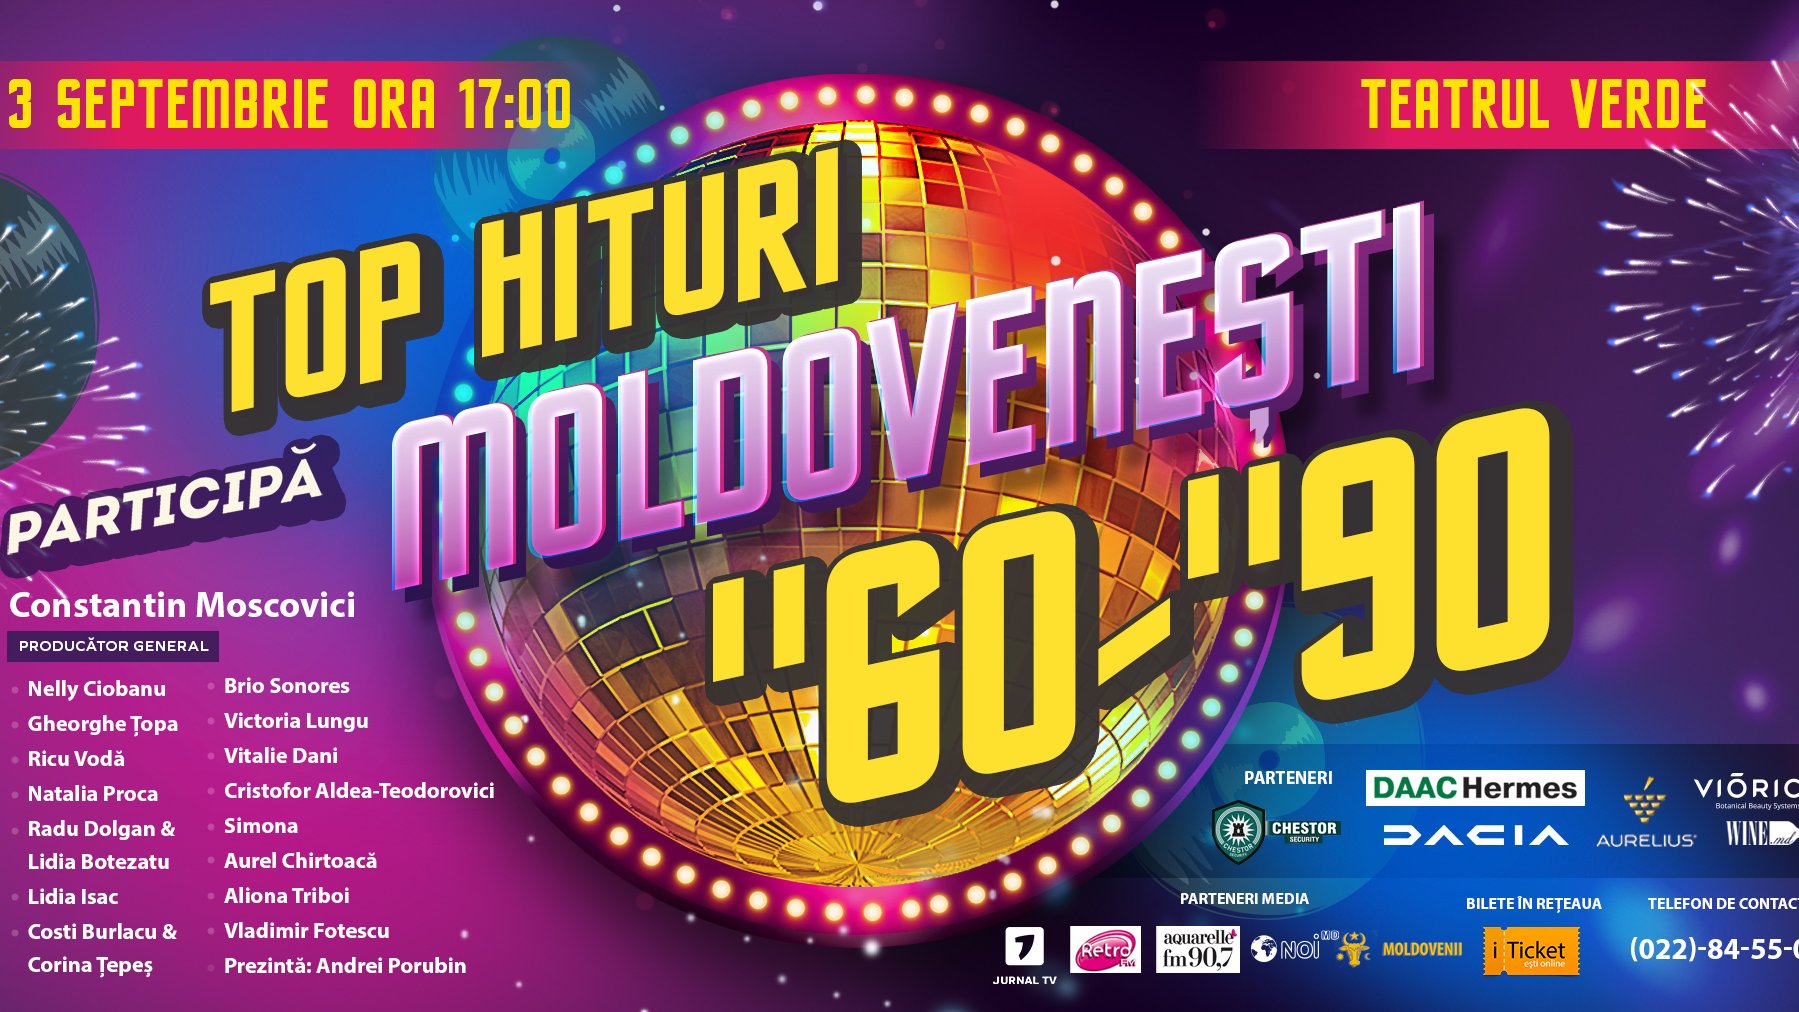 Top hituri moldovenesti ale anilor 60 - 90 